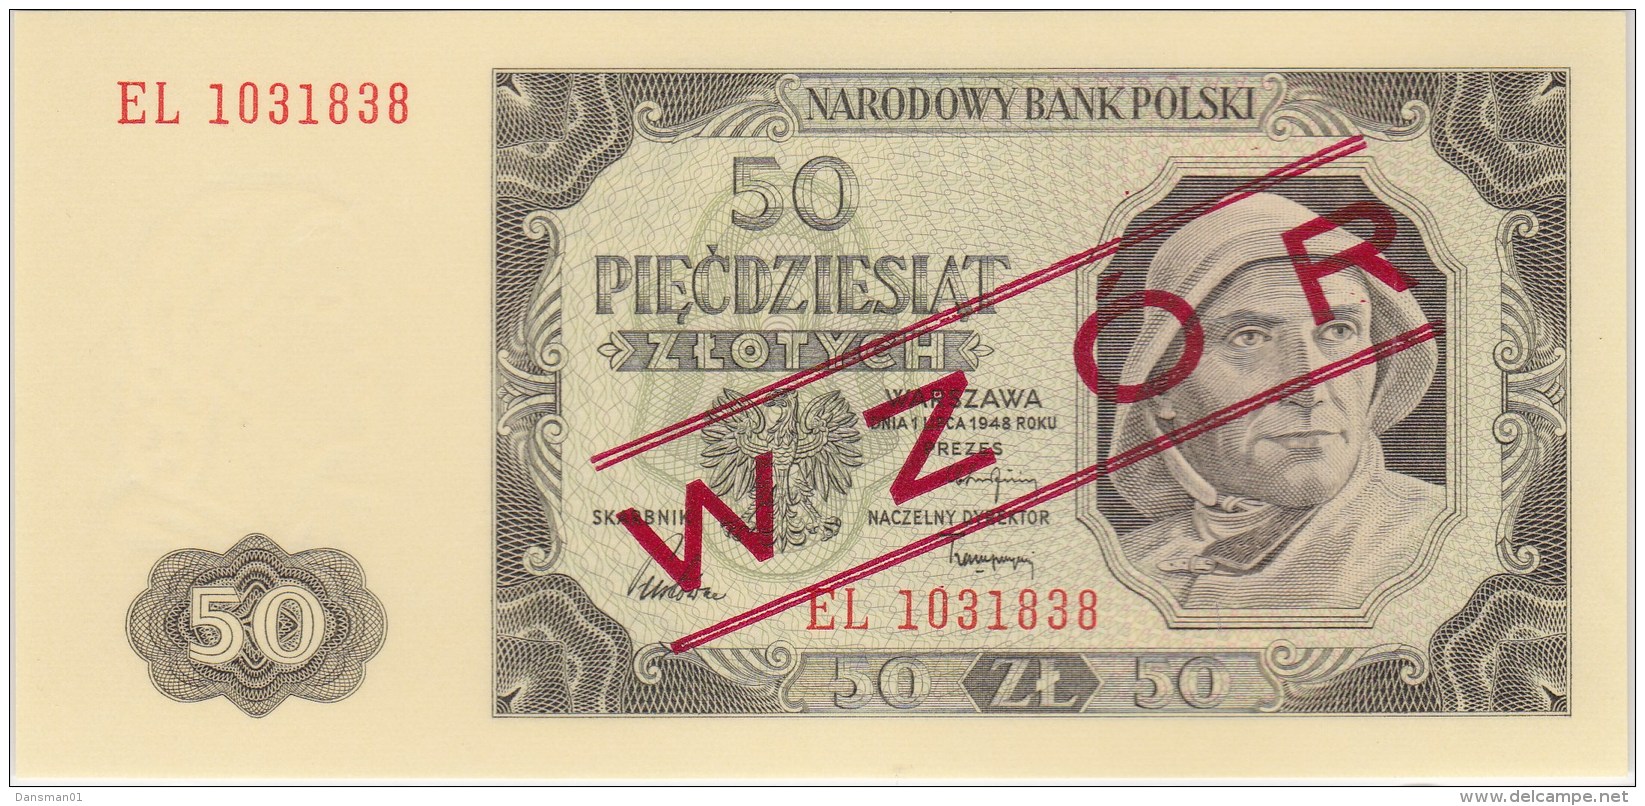 POLAND 1948 50 Zl WZOR EL 1031838 Uncirculated - Polonia